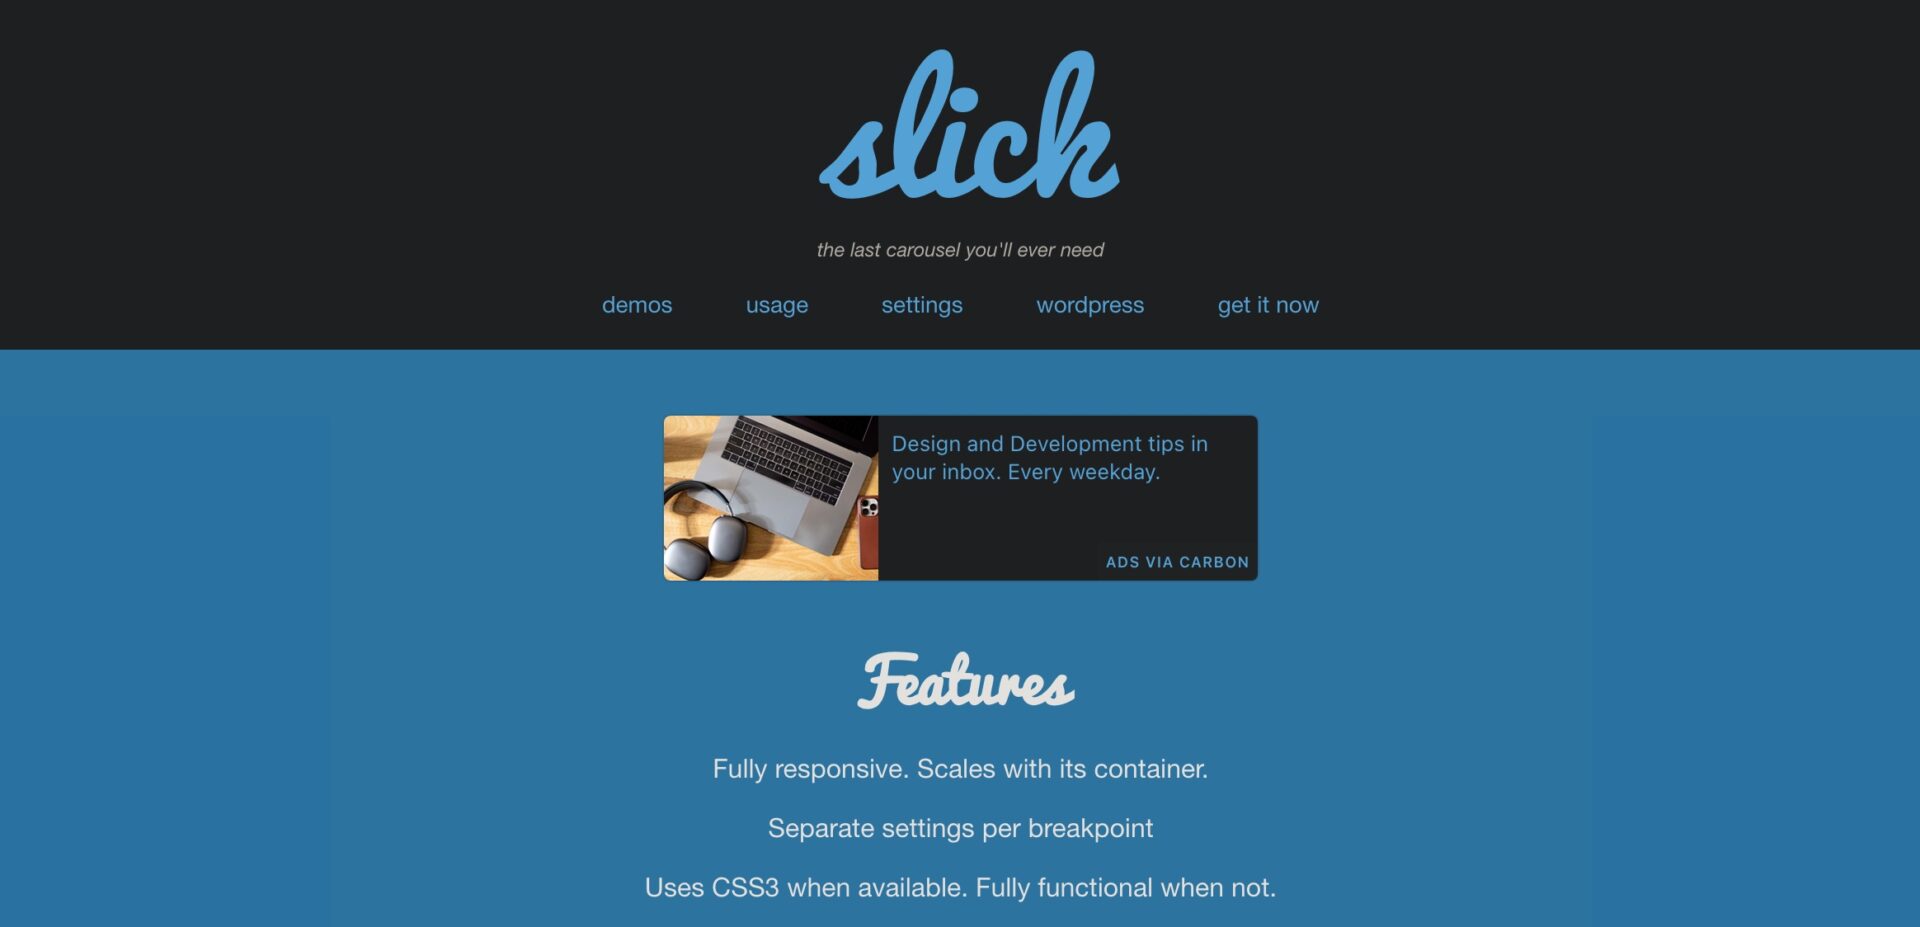 slickの使い方。公式サイトの画像。